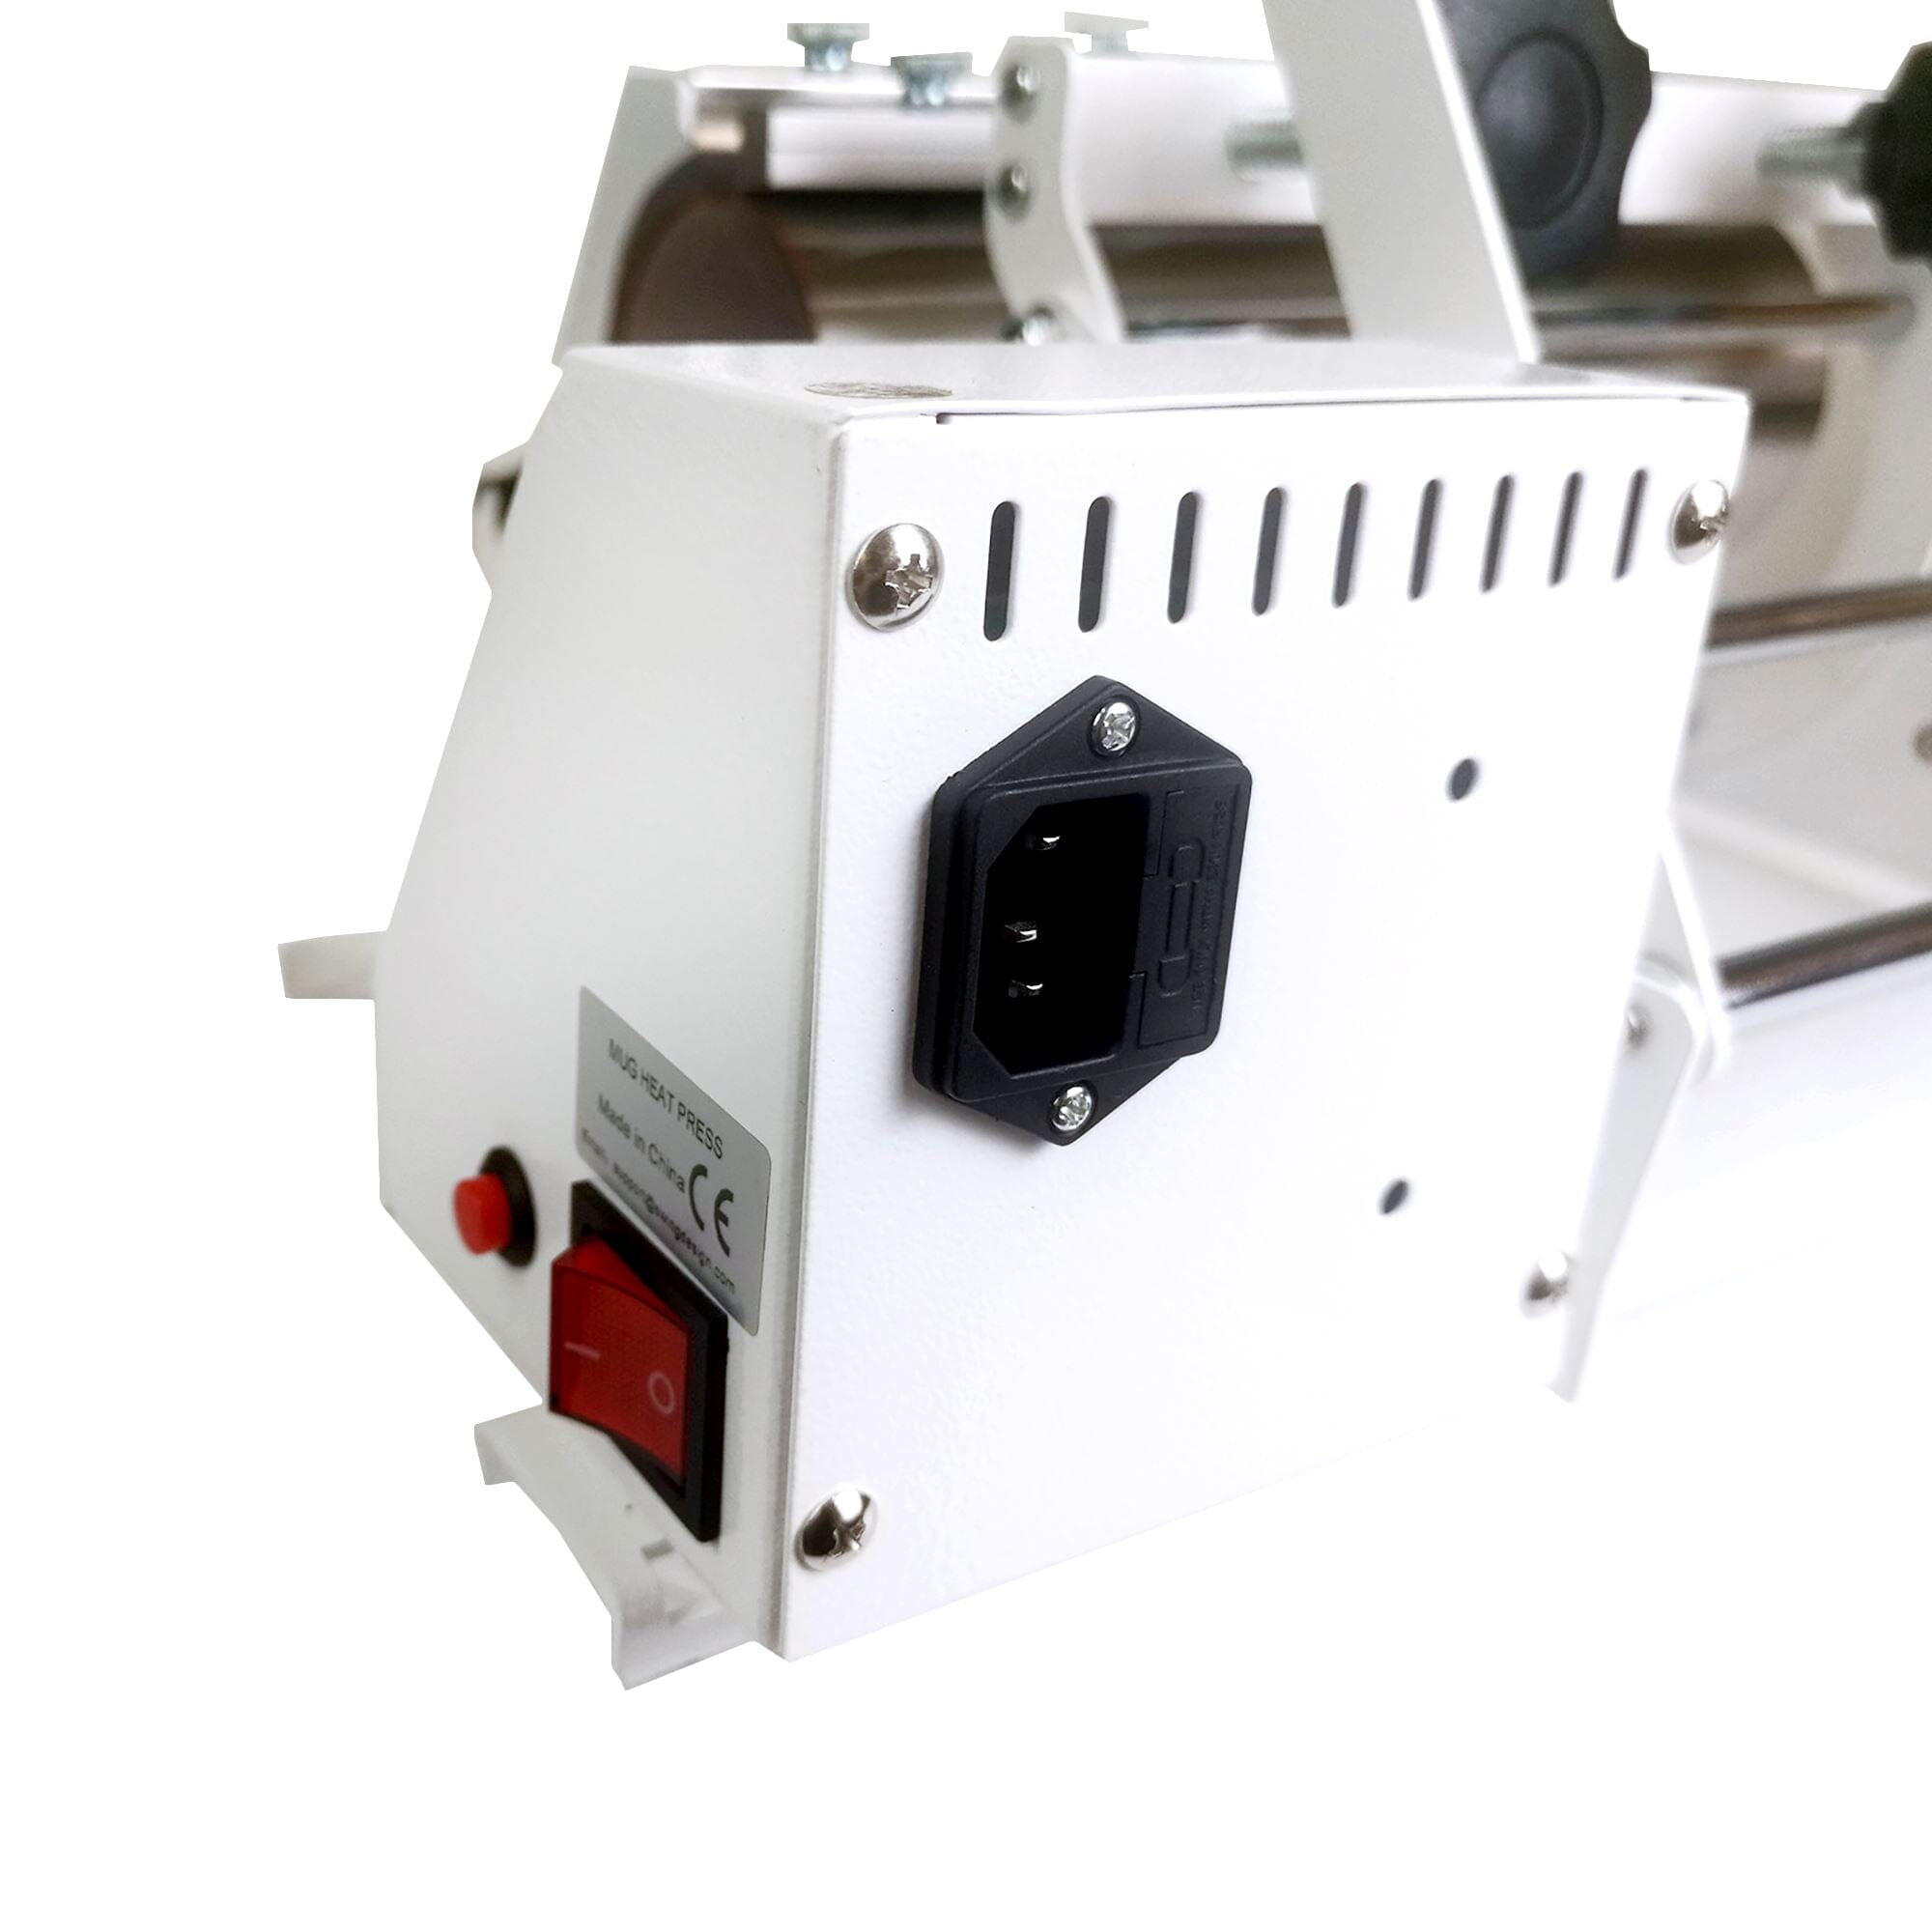 Portable Heat Press Machine for T Shirts - China Clamshell Heat